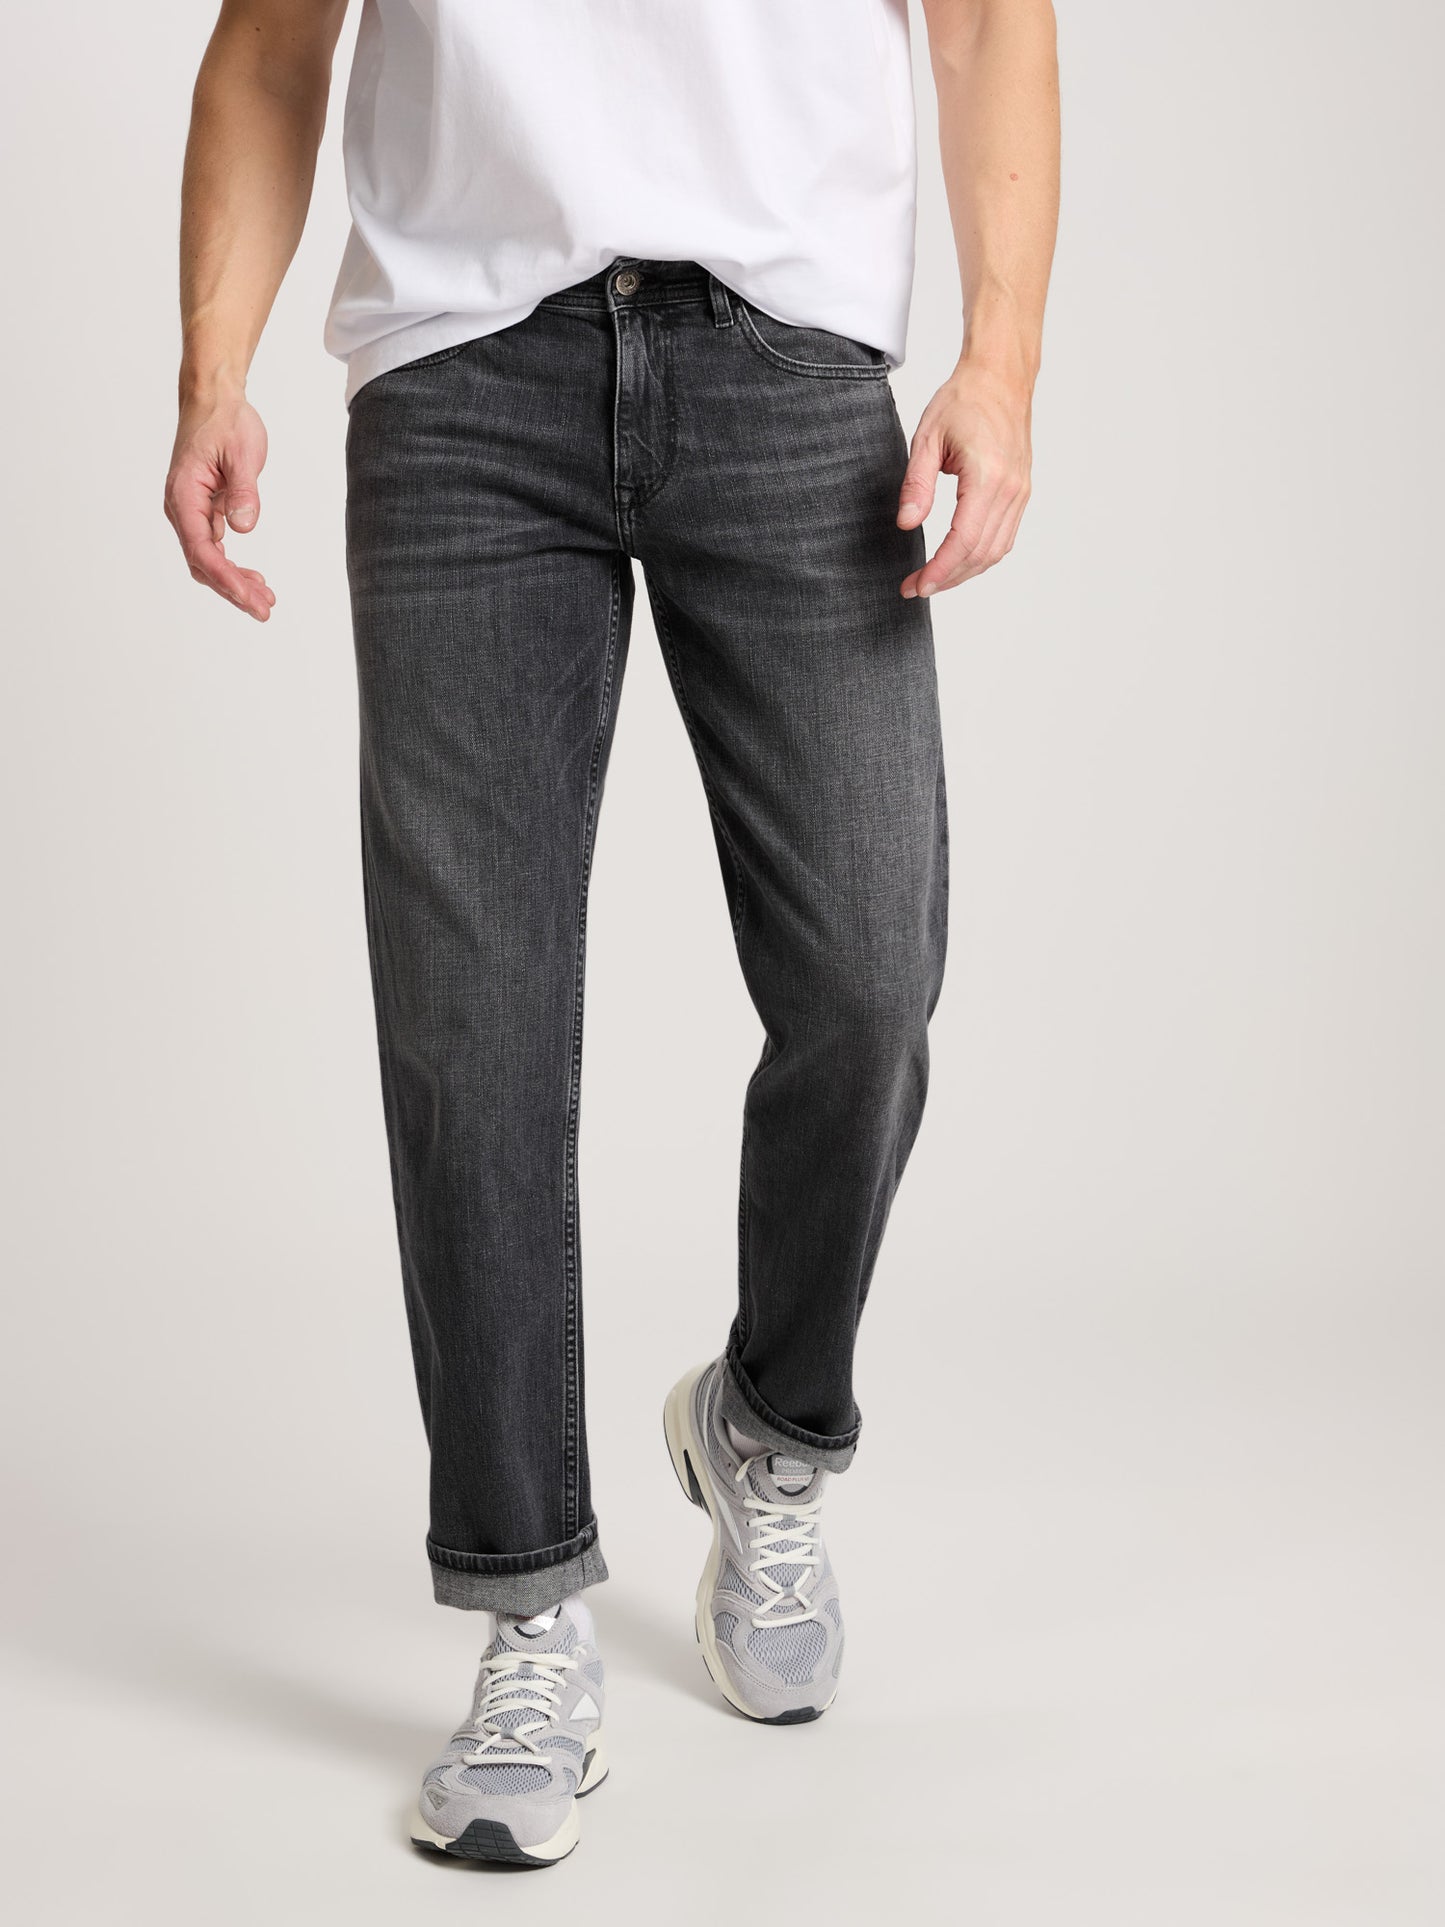 Antonio Herren Jeans Relaxed Fit Regular Waist Straight Leg anthrazit